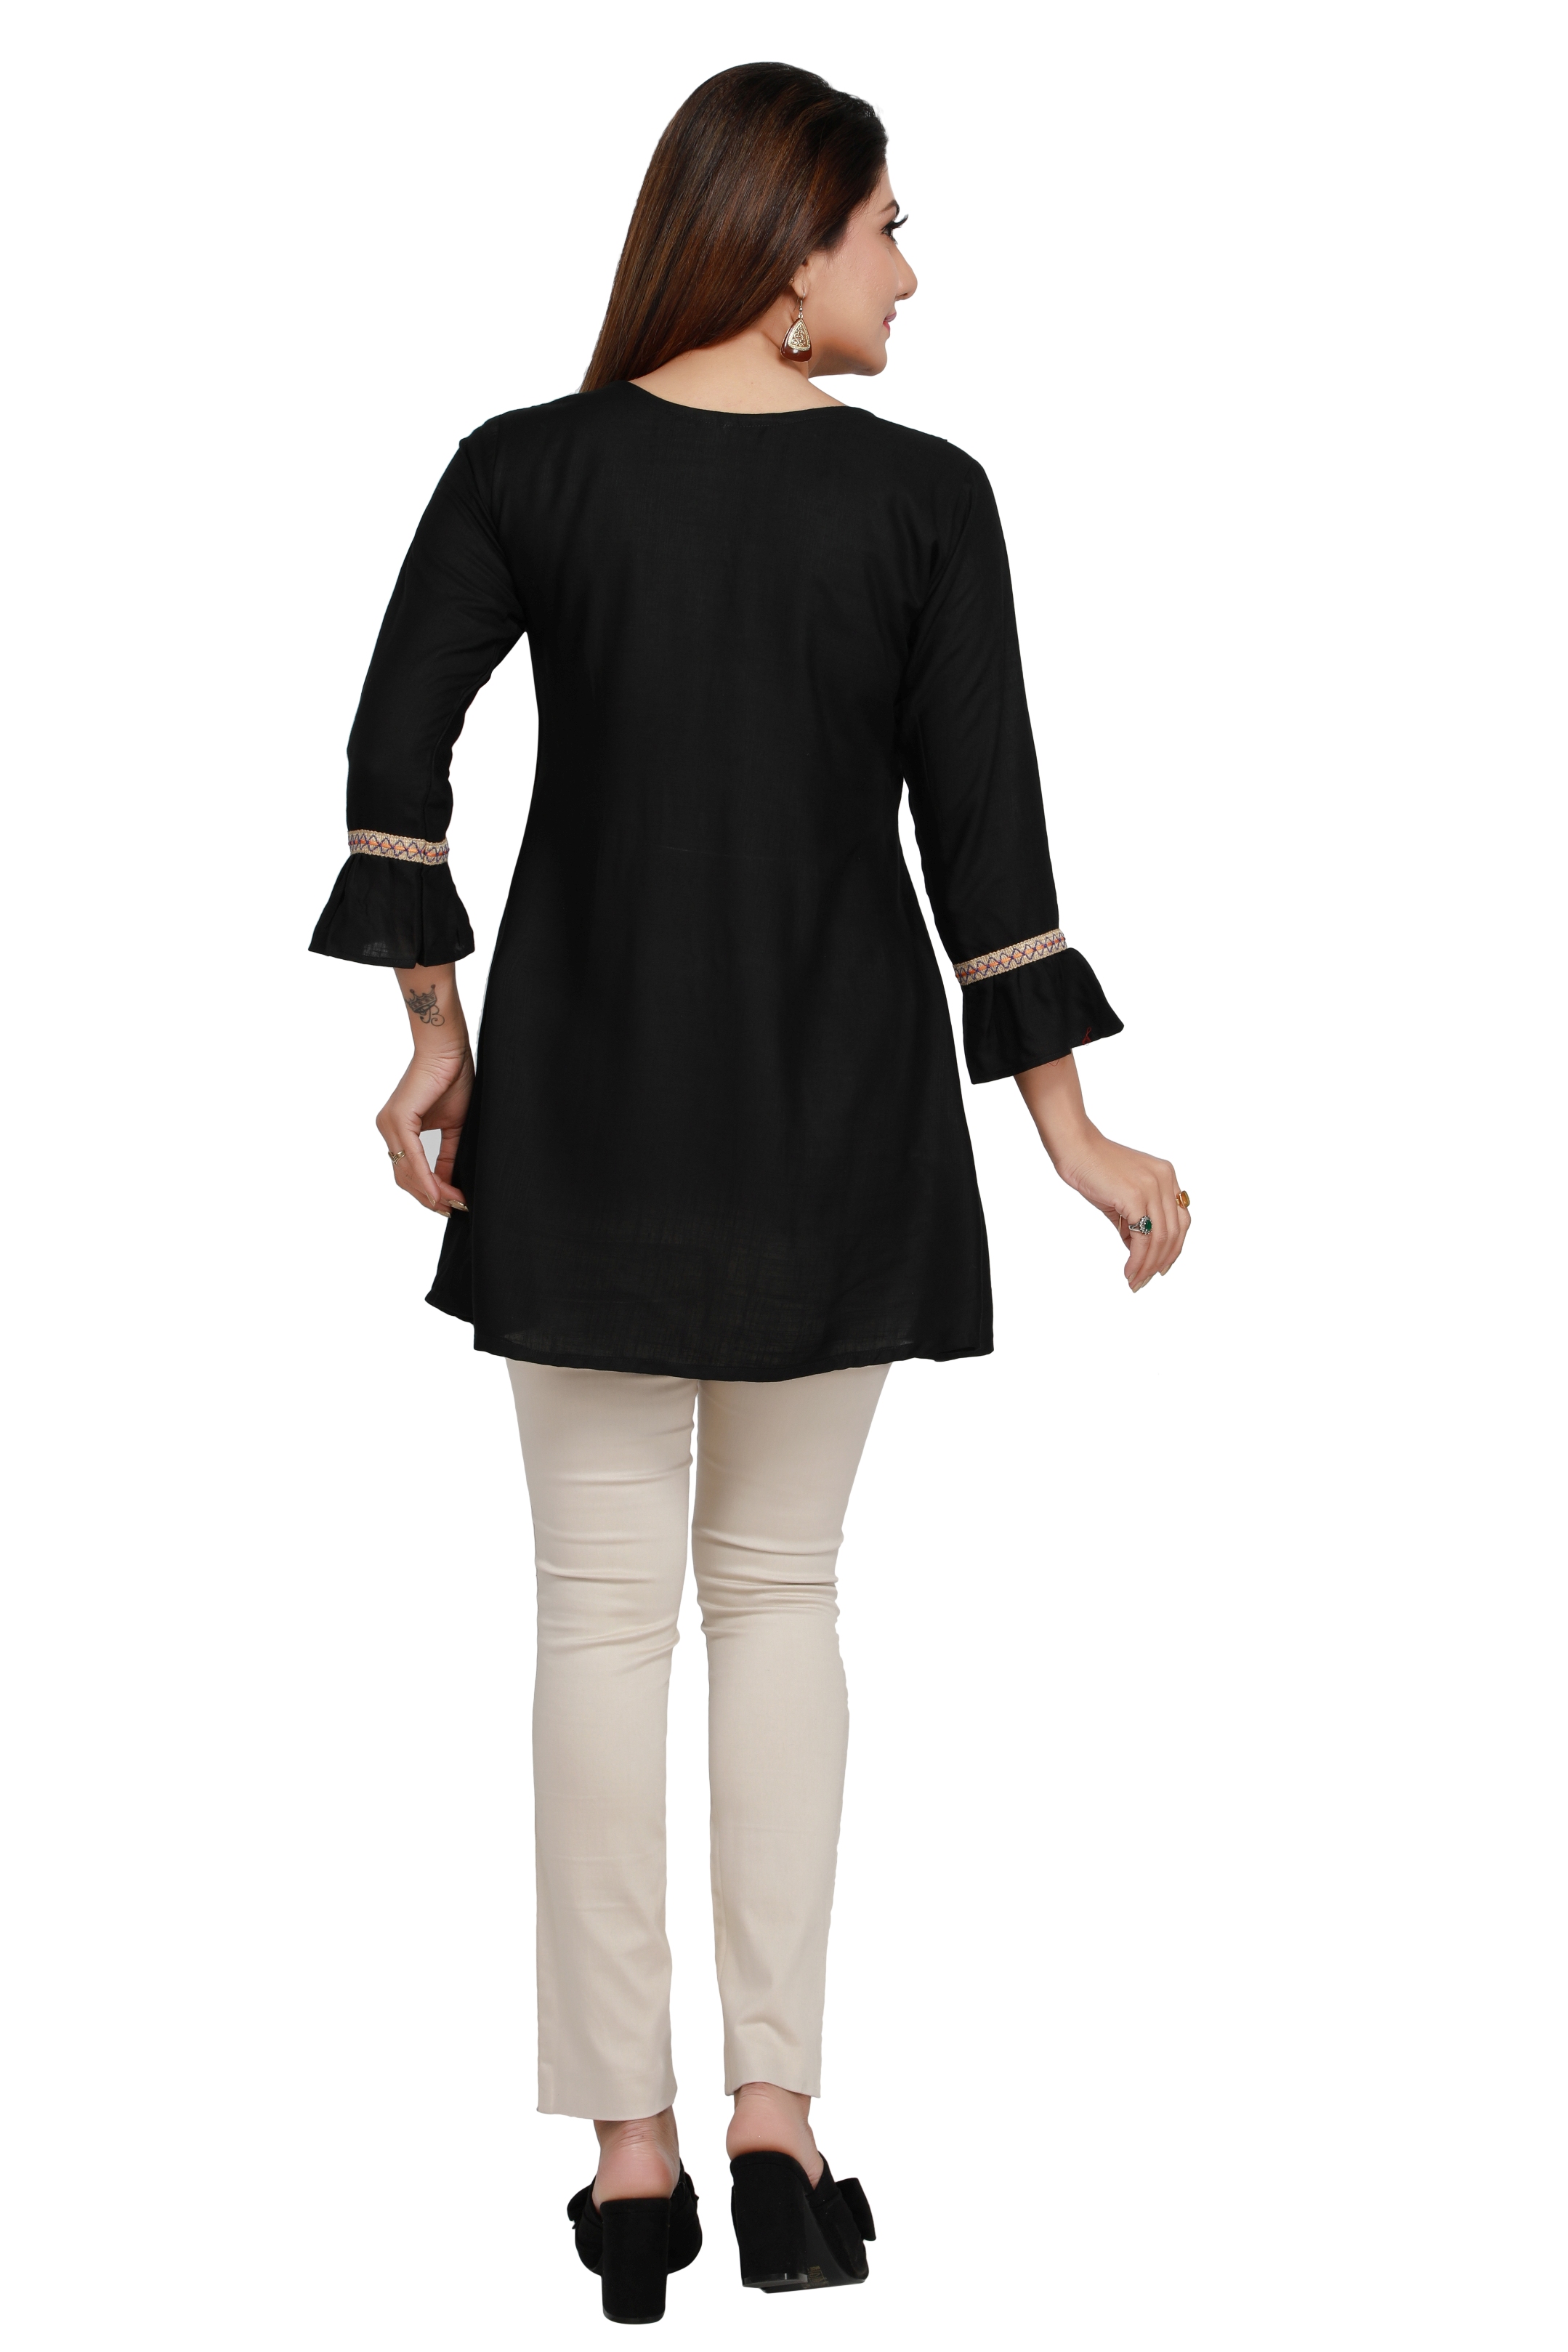 Simple plain black dress designs ideas kurti short kameez | Kashoore -  YouTube